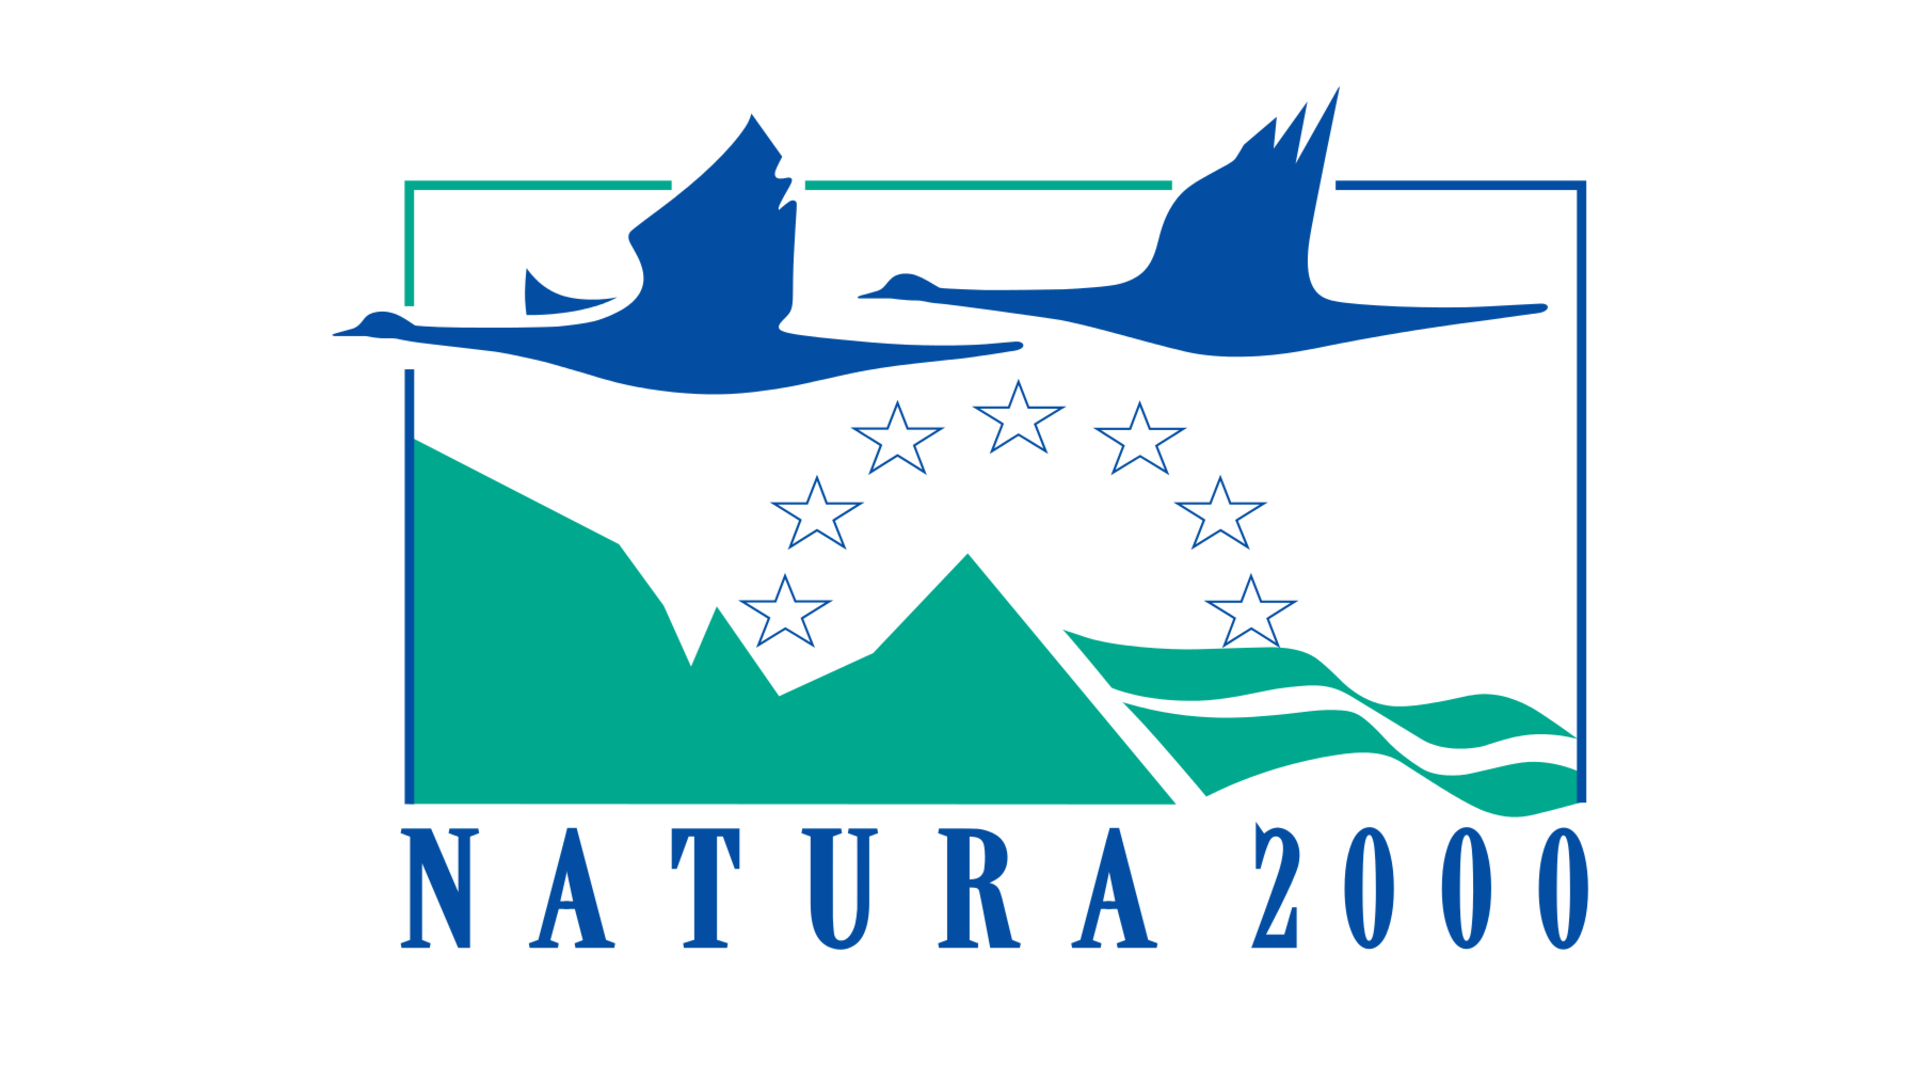 More information about "Σε διαβούλευση τρείς ακόμα Ειδικές Περιβαλλοντικές Μελέτες για τις περιοχές «Νatura 2000» σε Θεσσαλία και Ανατολική Μακεδονία – Θράκη"